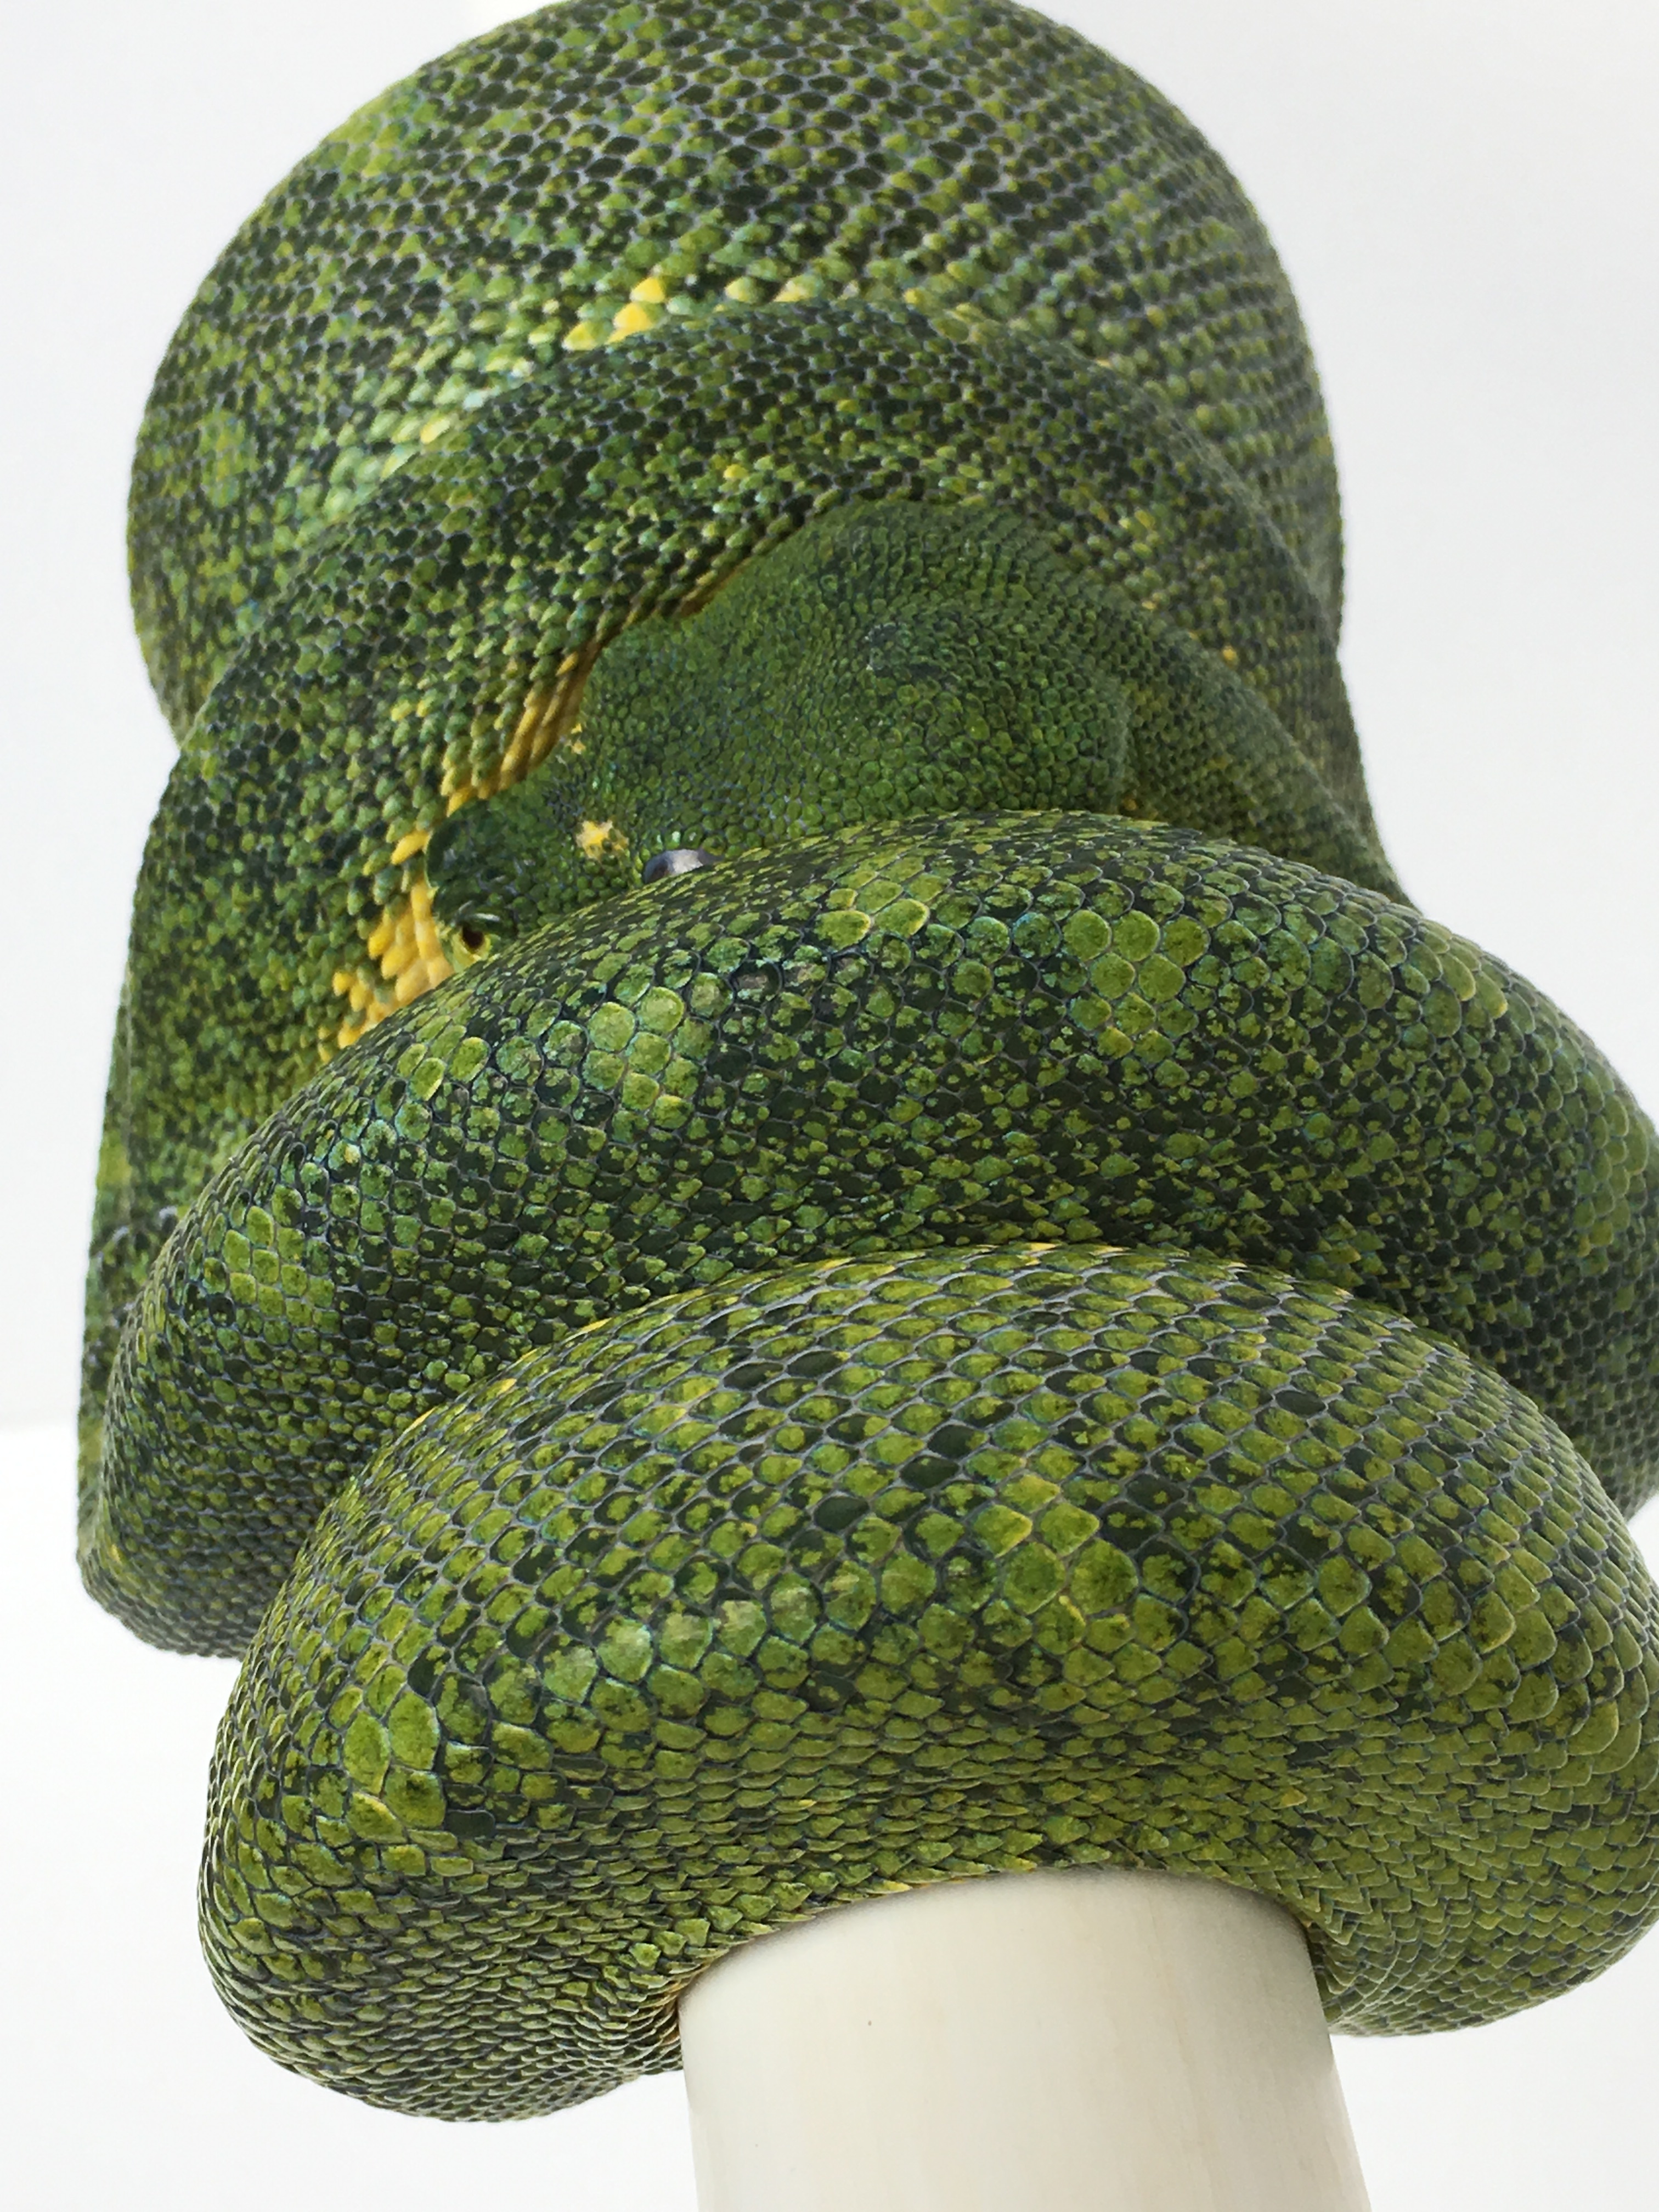 Lereh Green Tree Python by TSK, Inc.